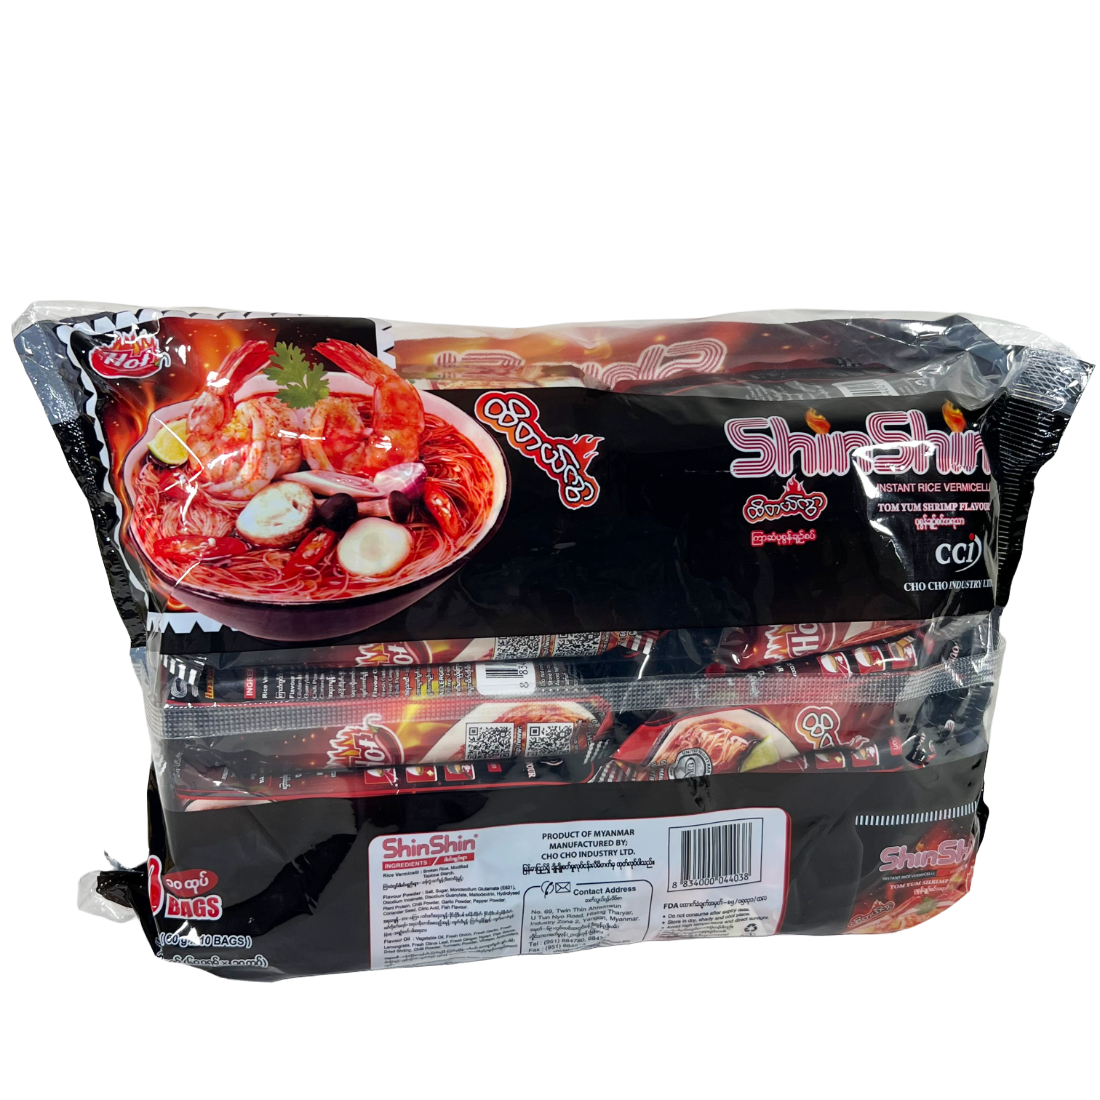 Shin Shin Instant Rice Vermicelli (Tom Yum Shrimp Flavor) 60g